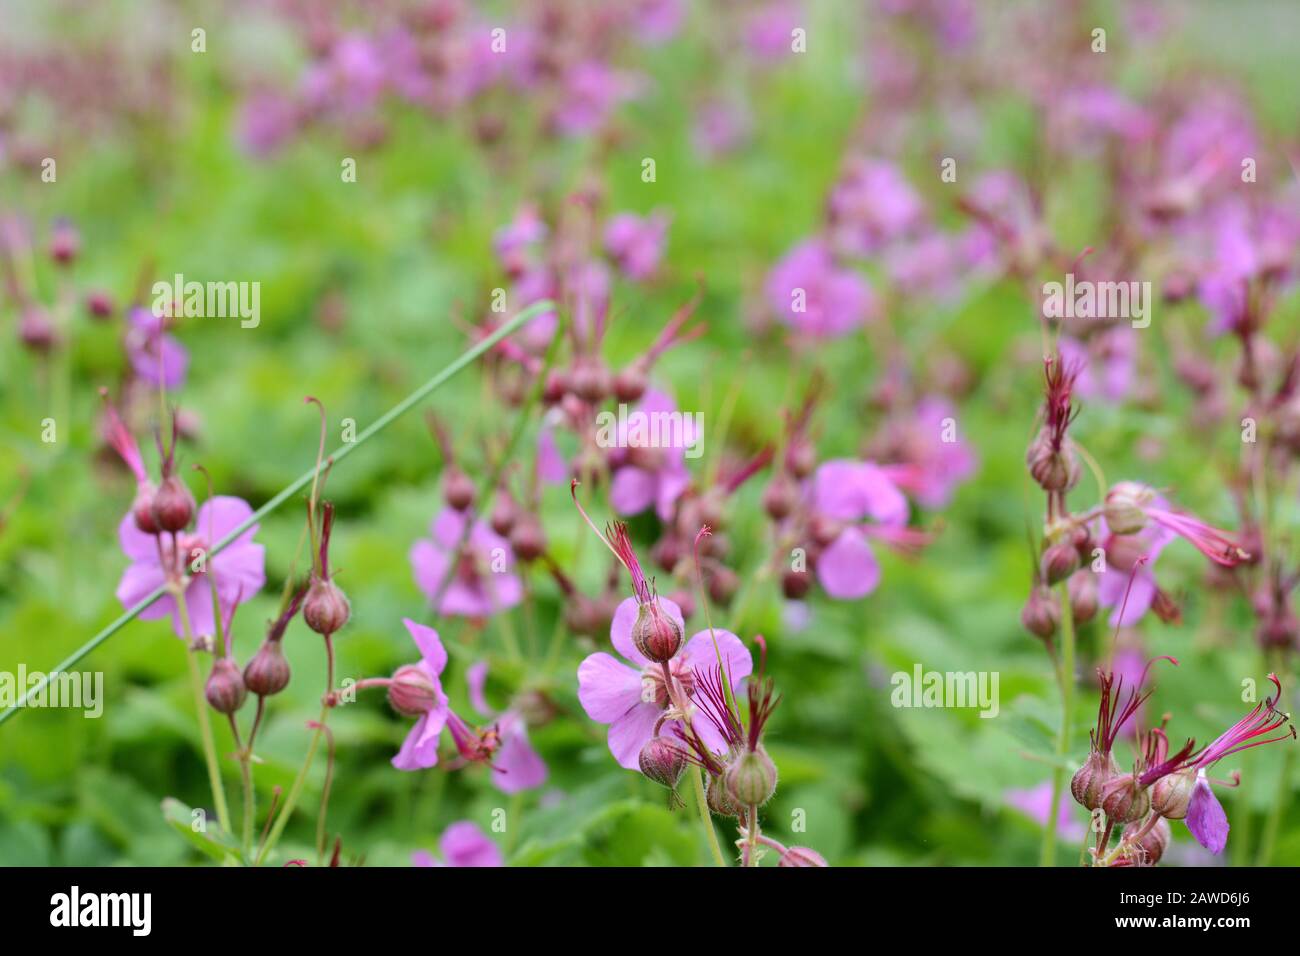 Rock Cranes-Bill, Hardy Geranium, Wild Geranium 'Czakor' (Geranium macrorrhizum) Stock Photo